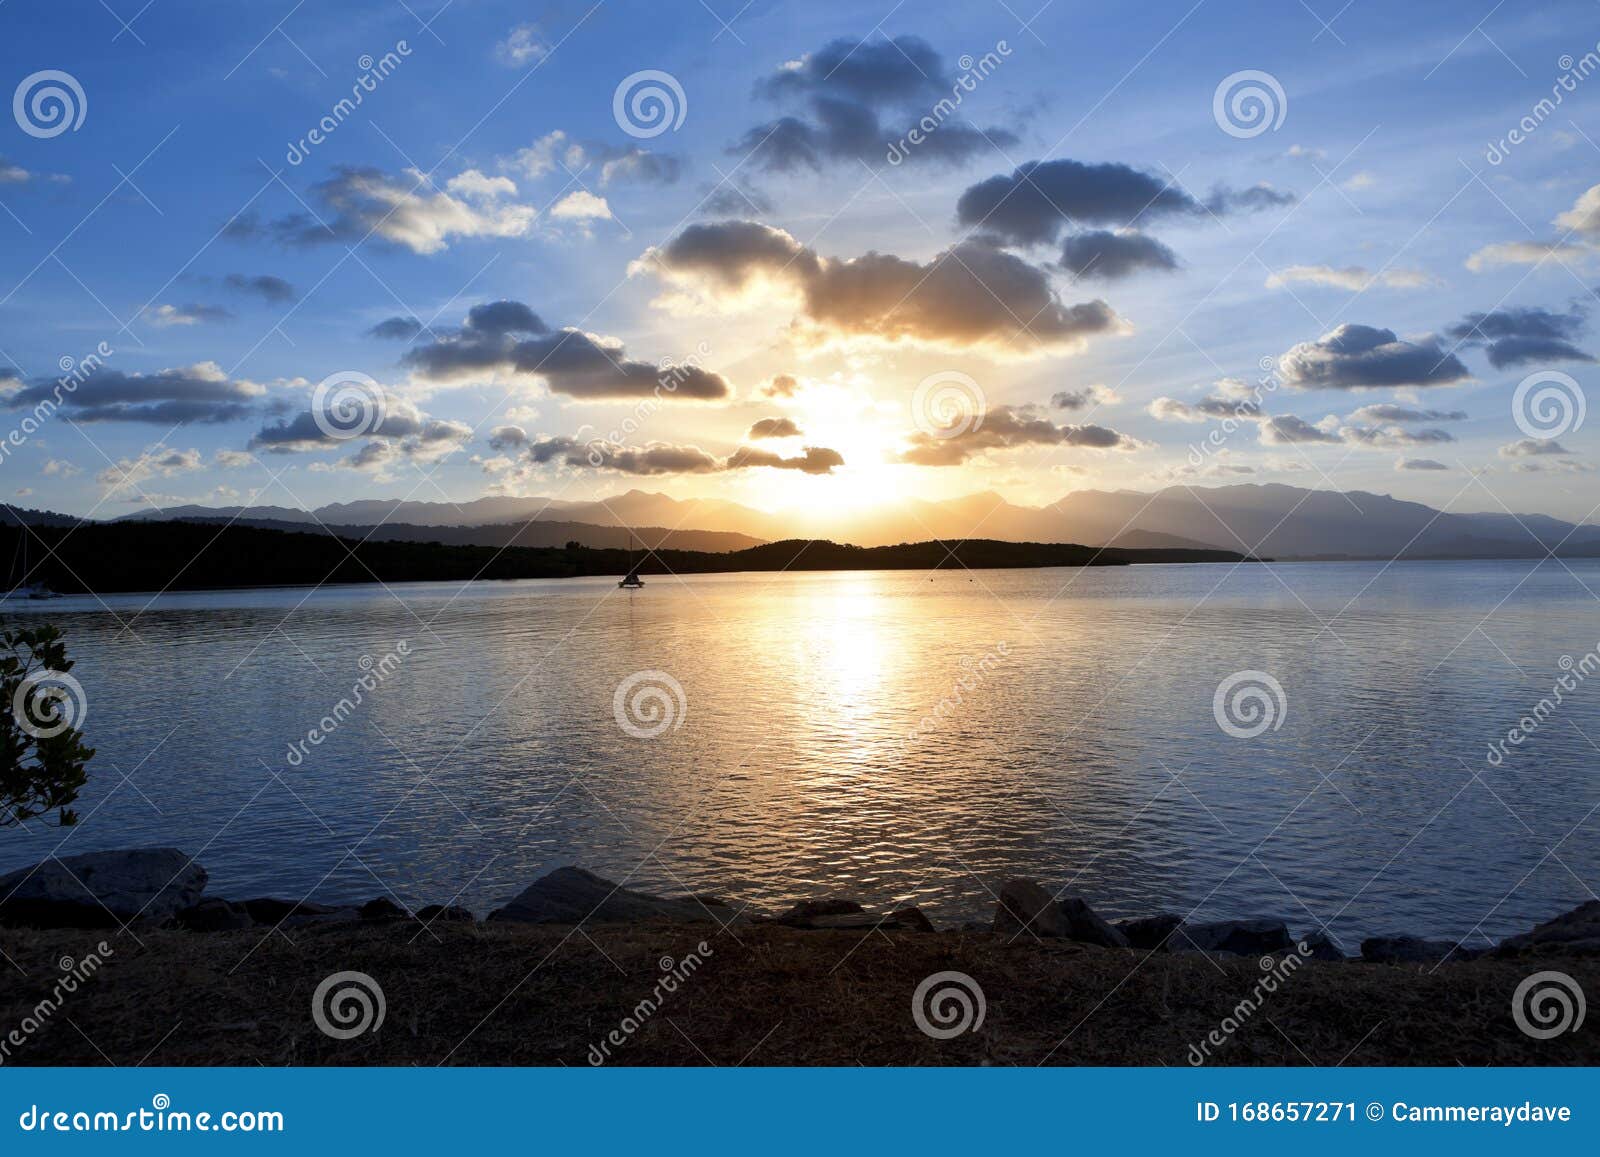 port douglas queensland sunset